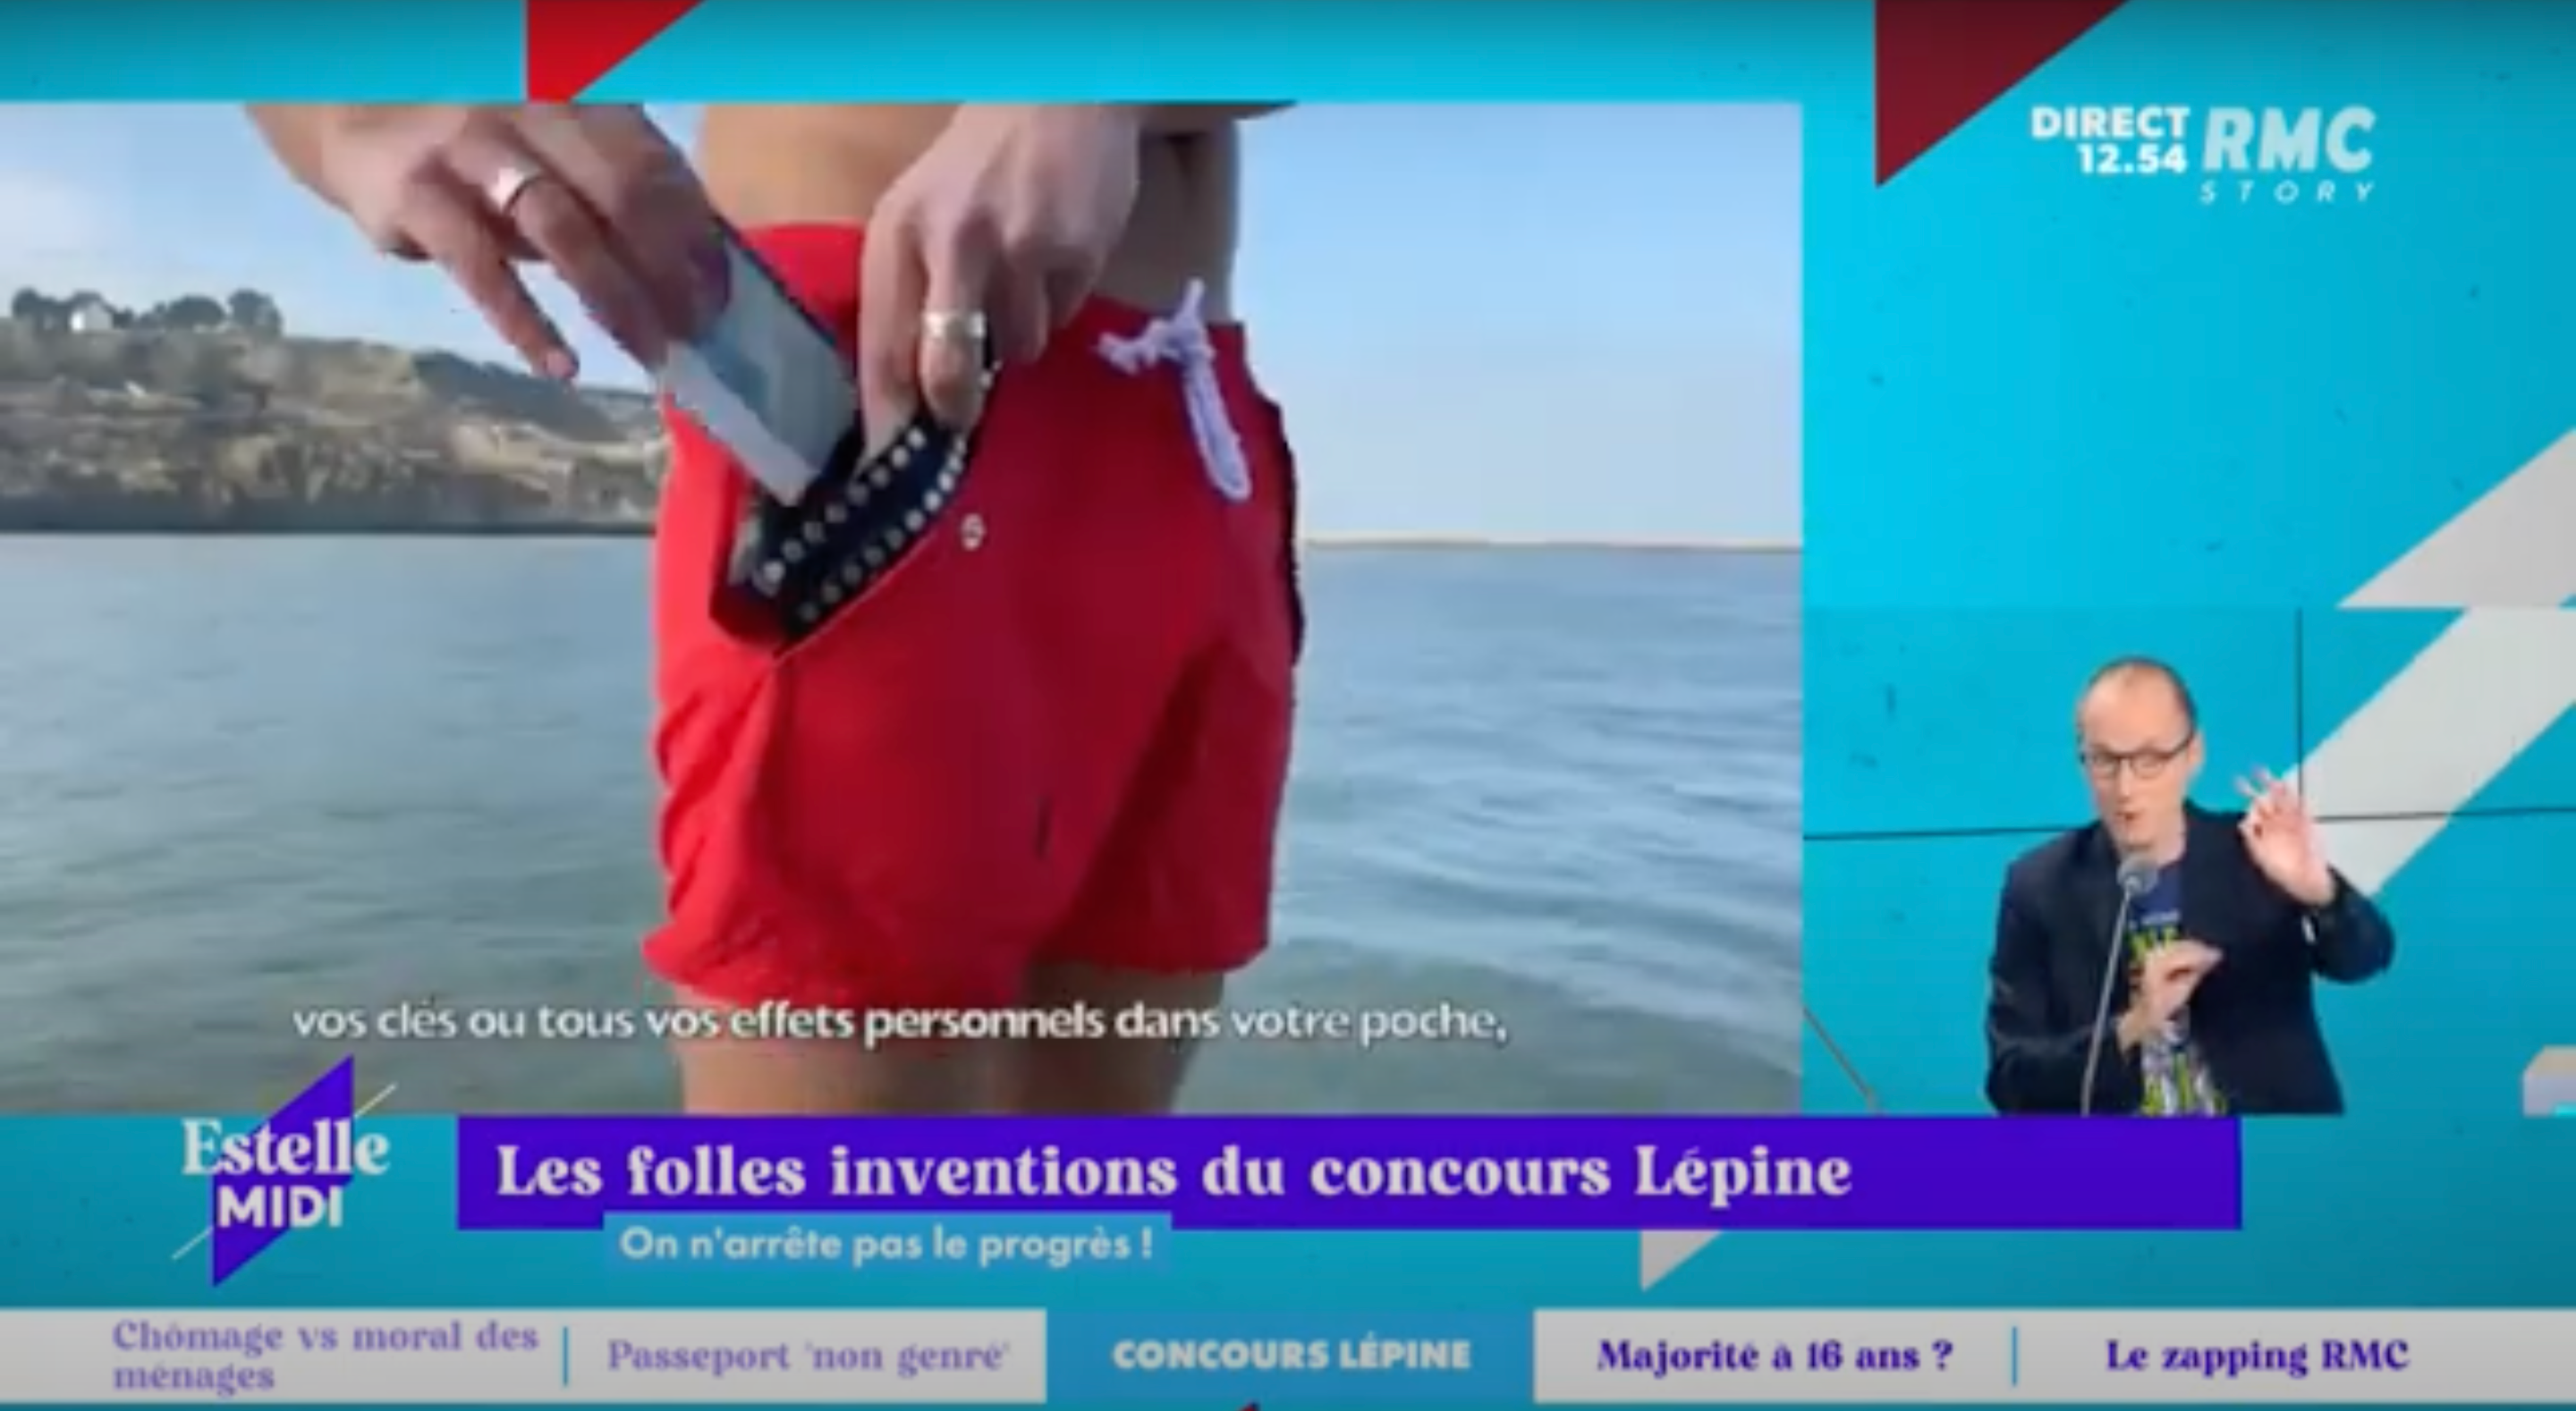 Load video: Estelle Midi sur RMC